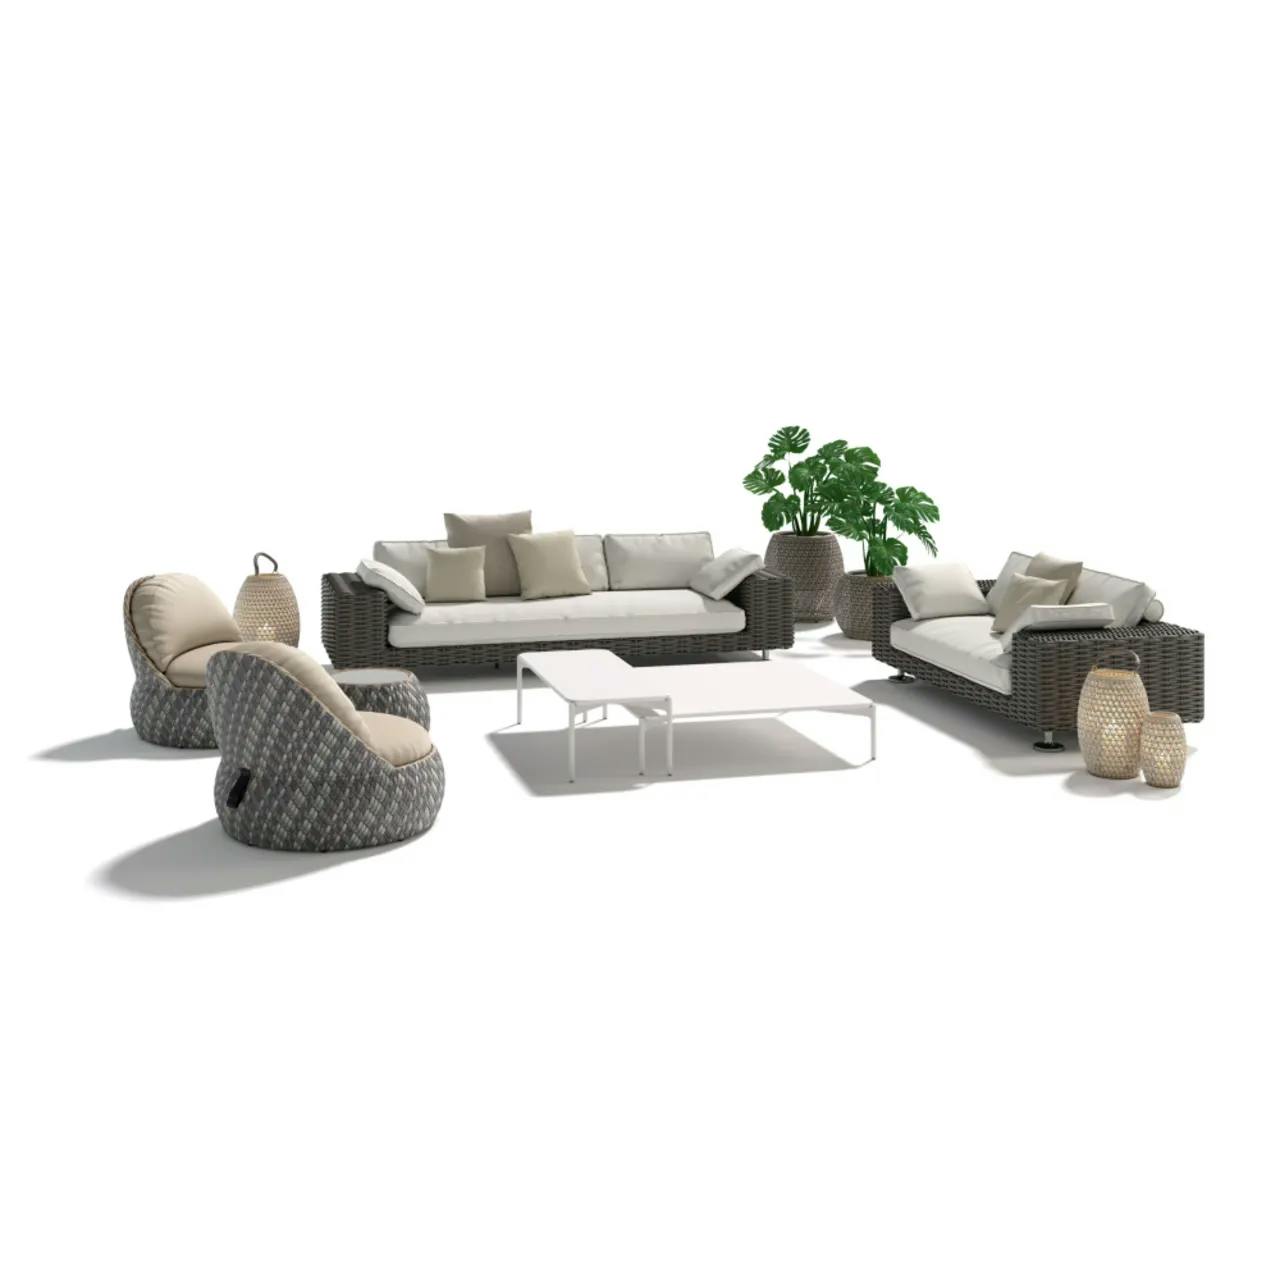 DEDON DALA Lounge Chairs, Side Table, Lanterns & Planters | PAROS Modular Seating | IZON Coffee Tables